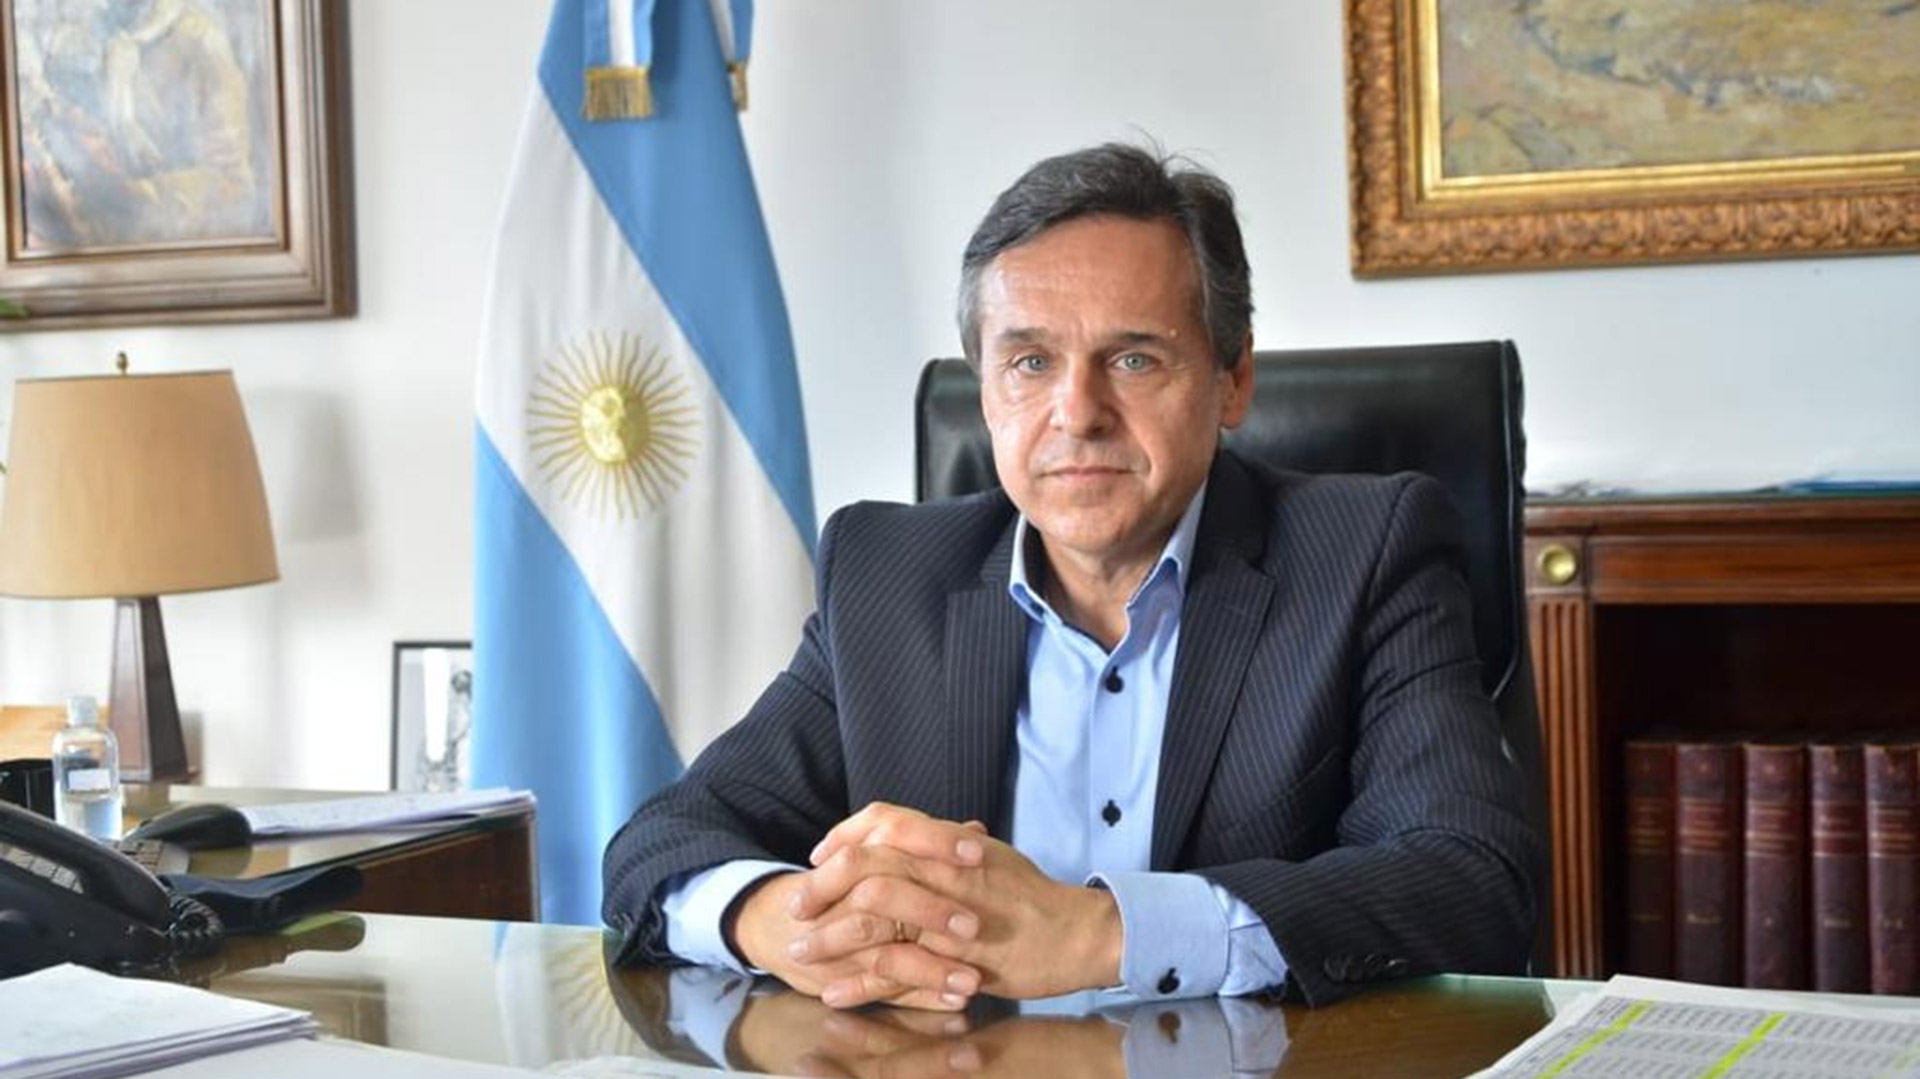 Alberto Fernández le tomará juramento al nuevo ministro de Transporte